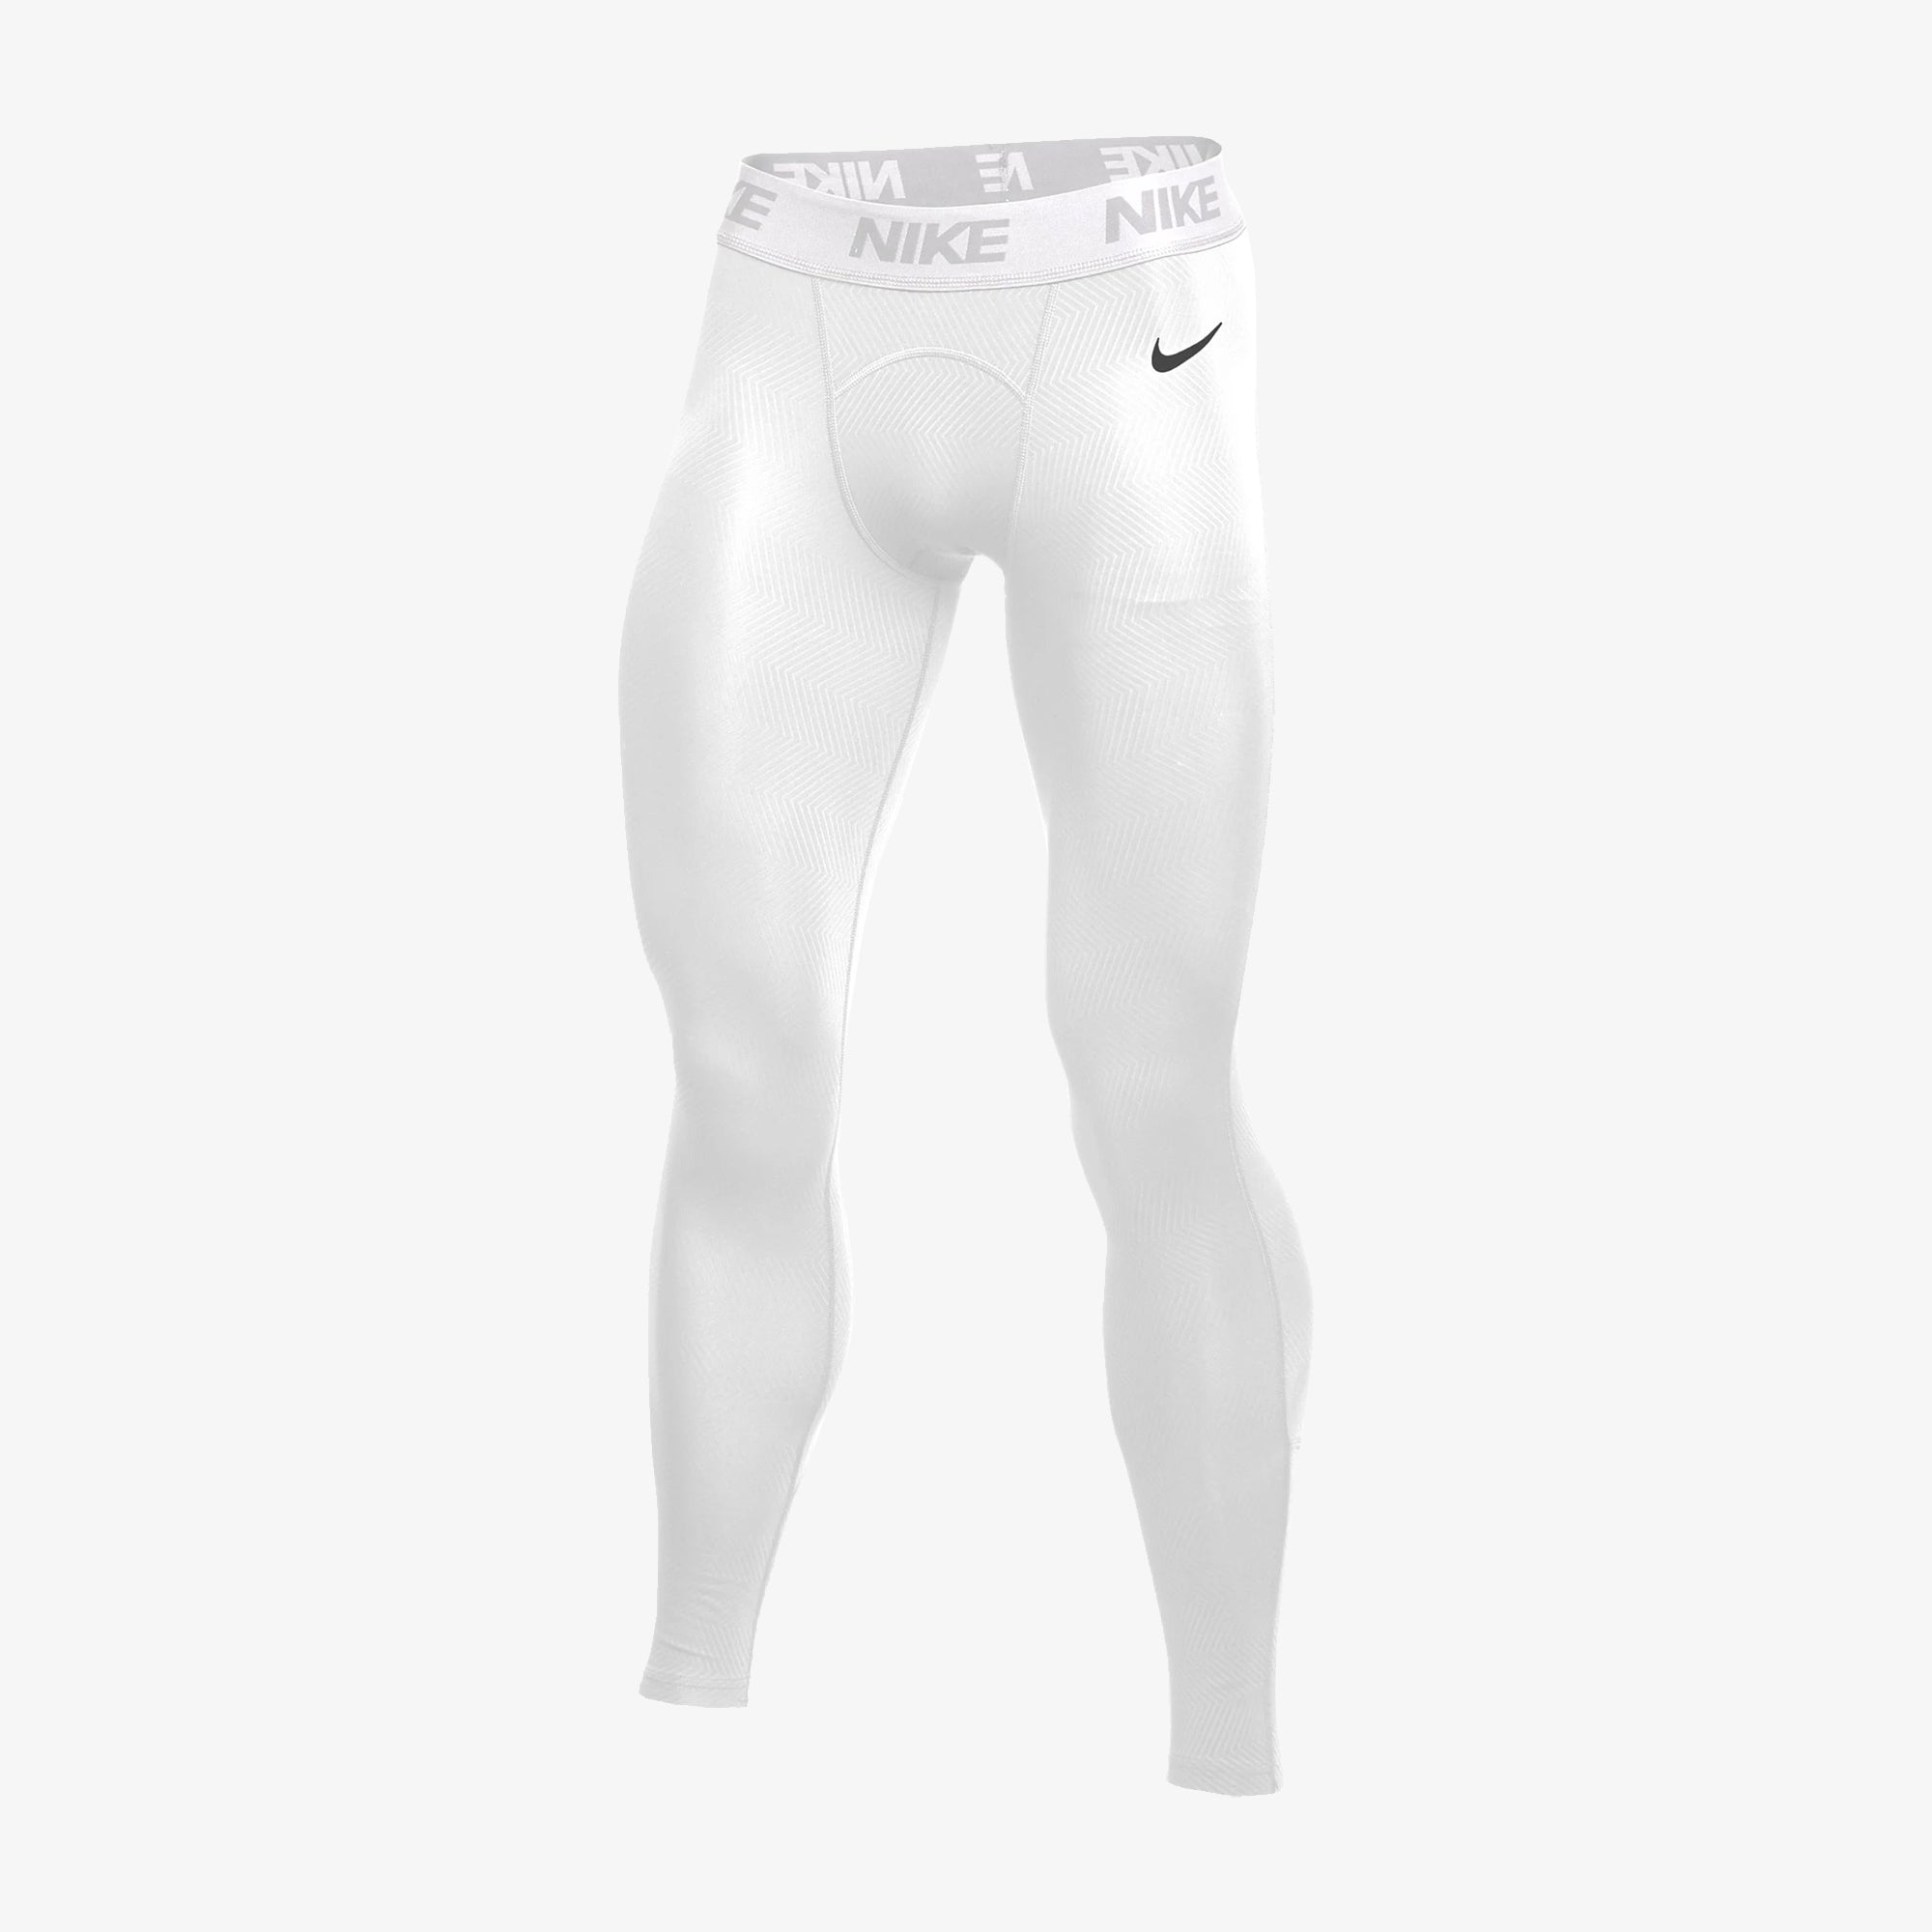 Nike Pro Tights 3/4 - White/Black | www.unisportstore.com